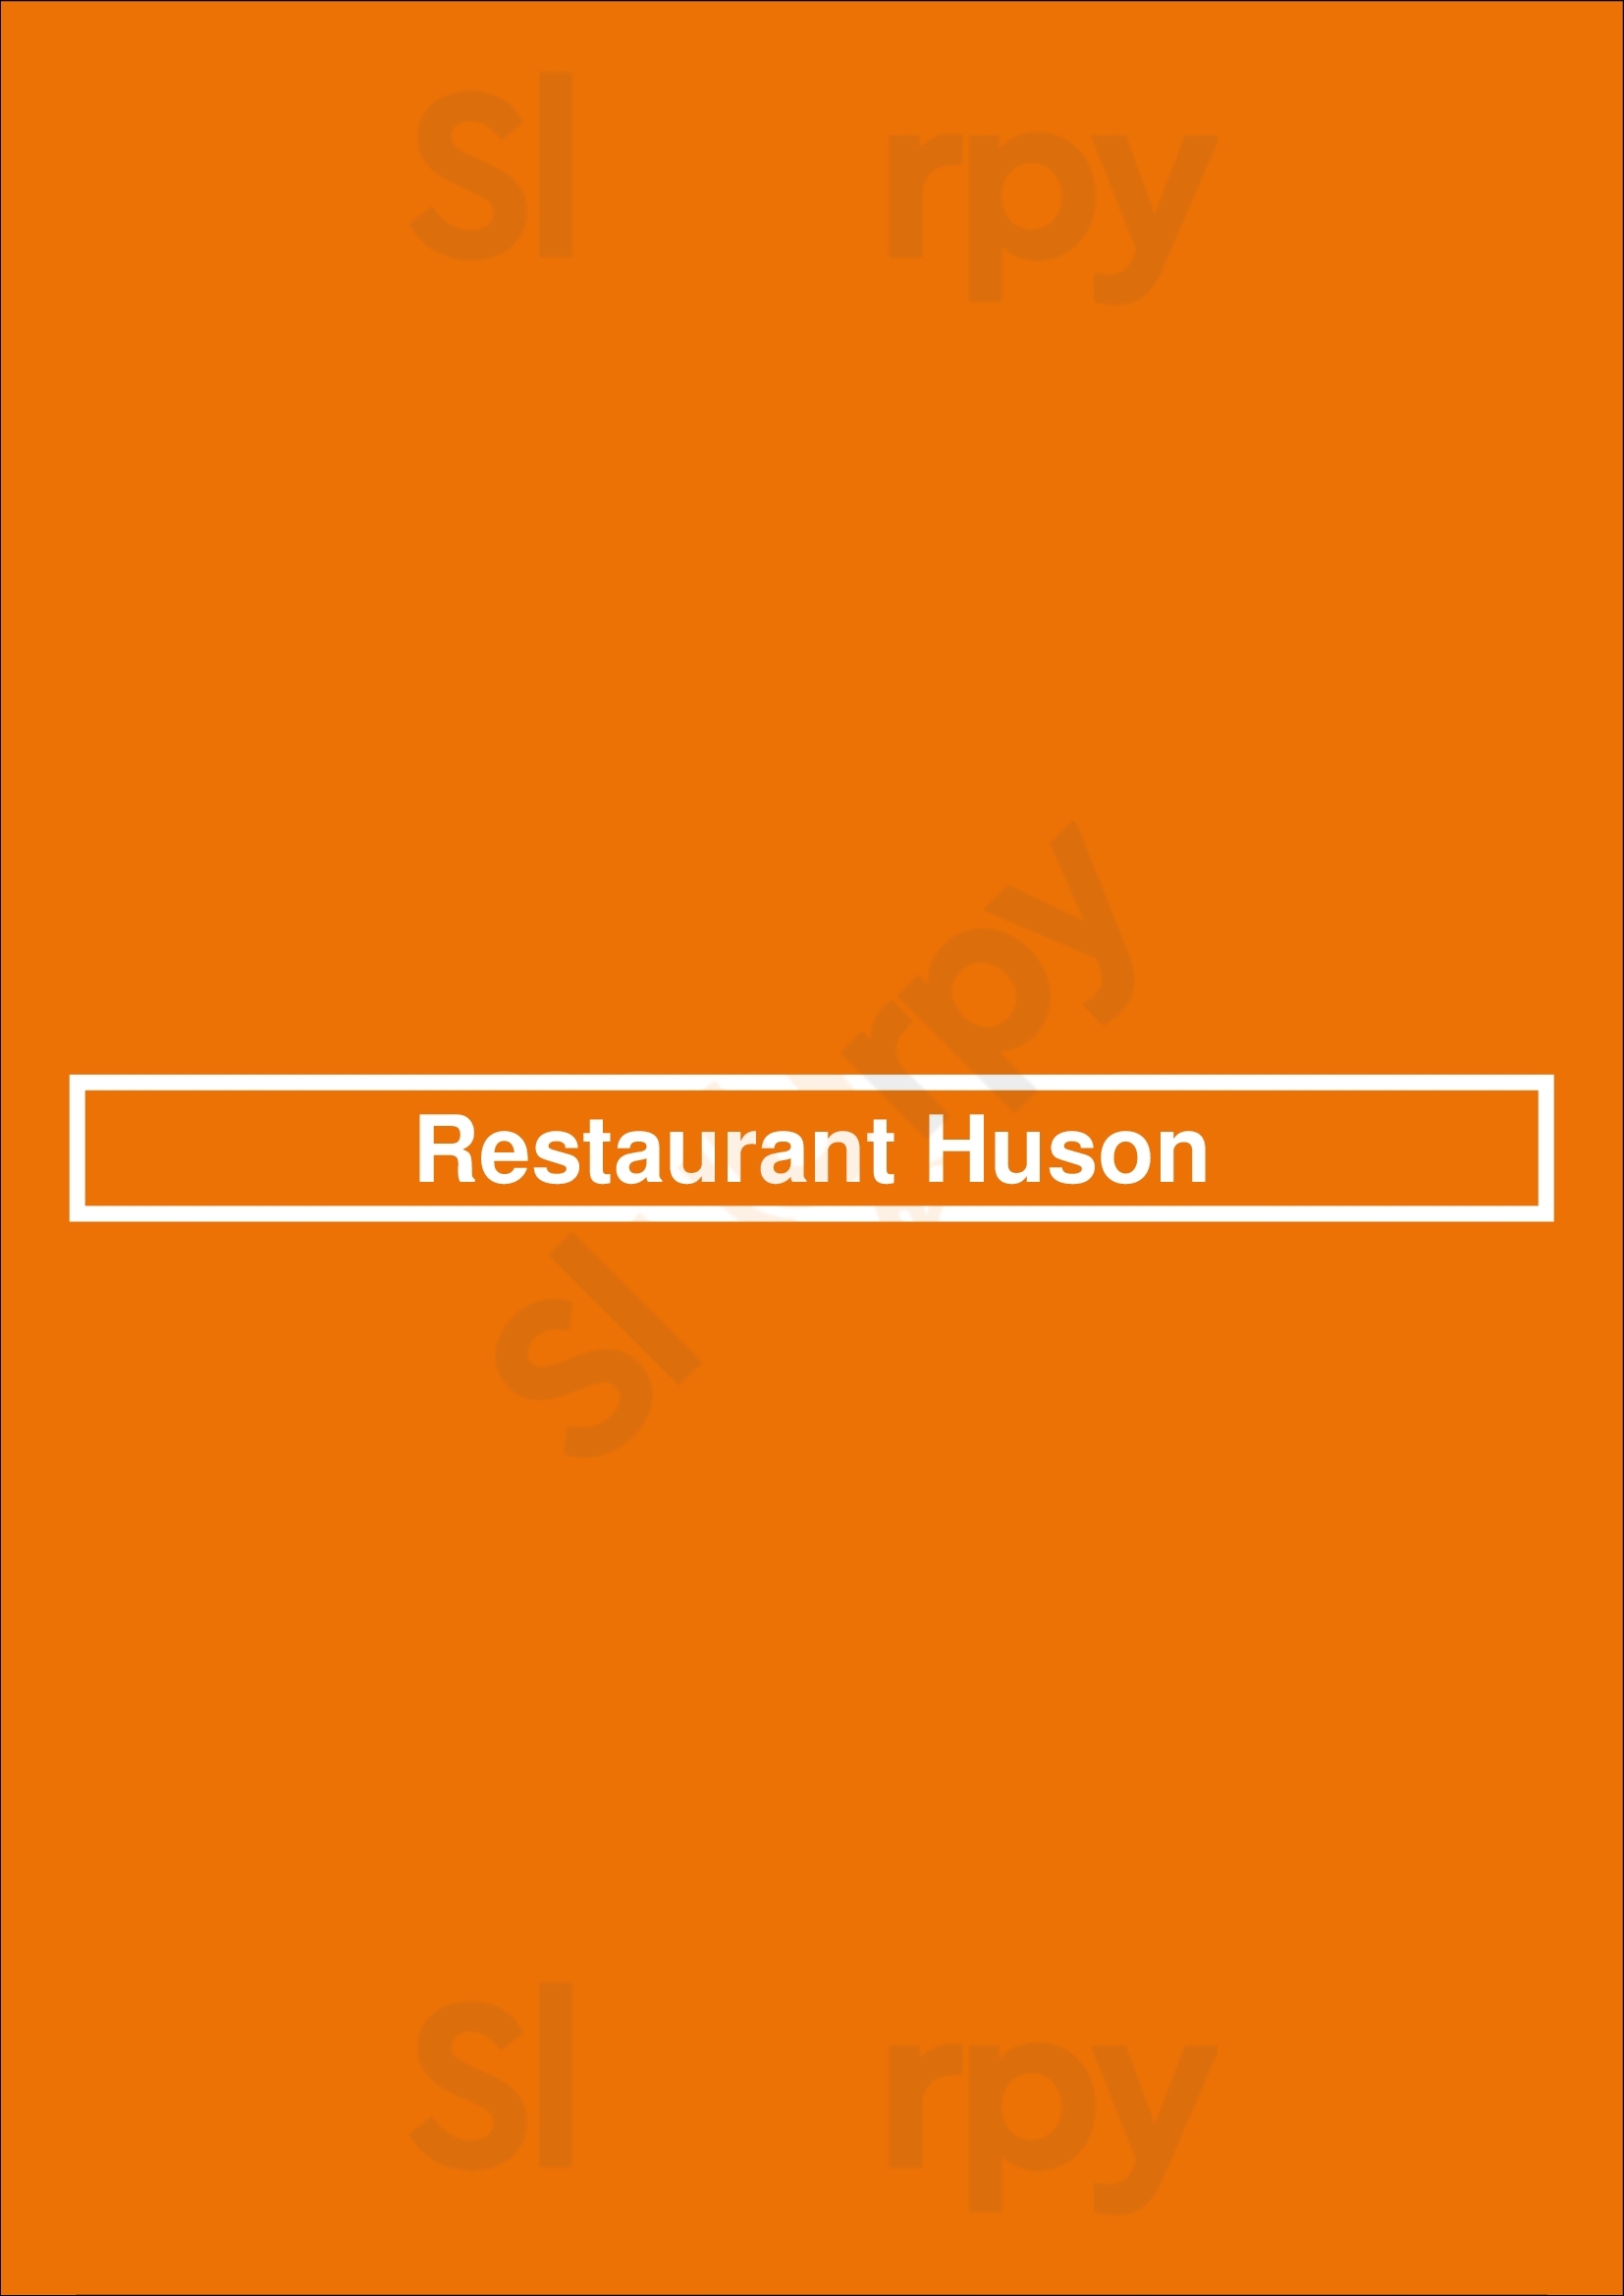 Restaurant Huson Rotterdam Menu - 1